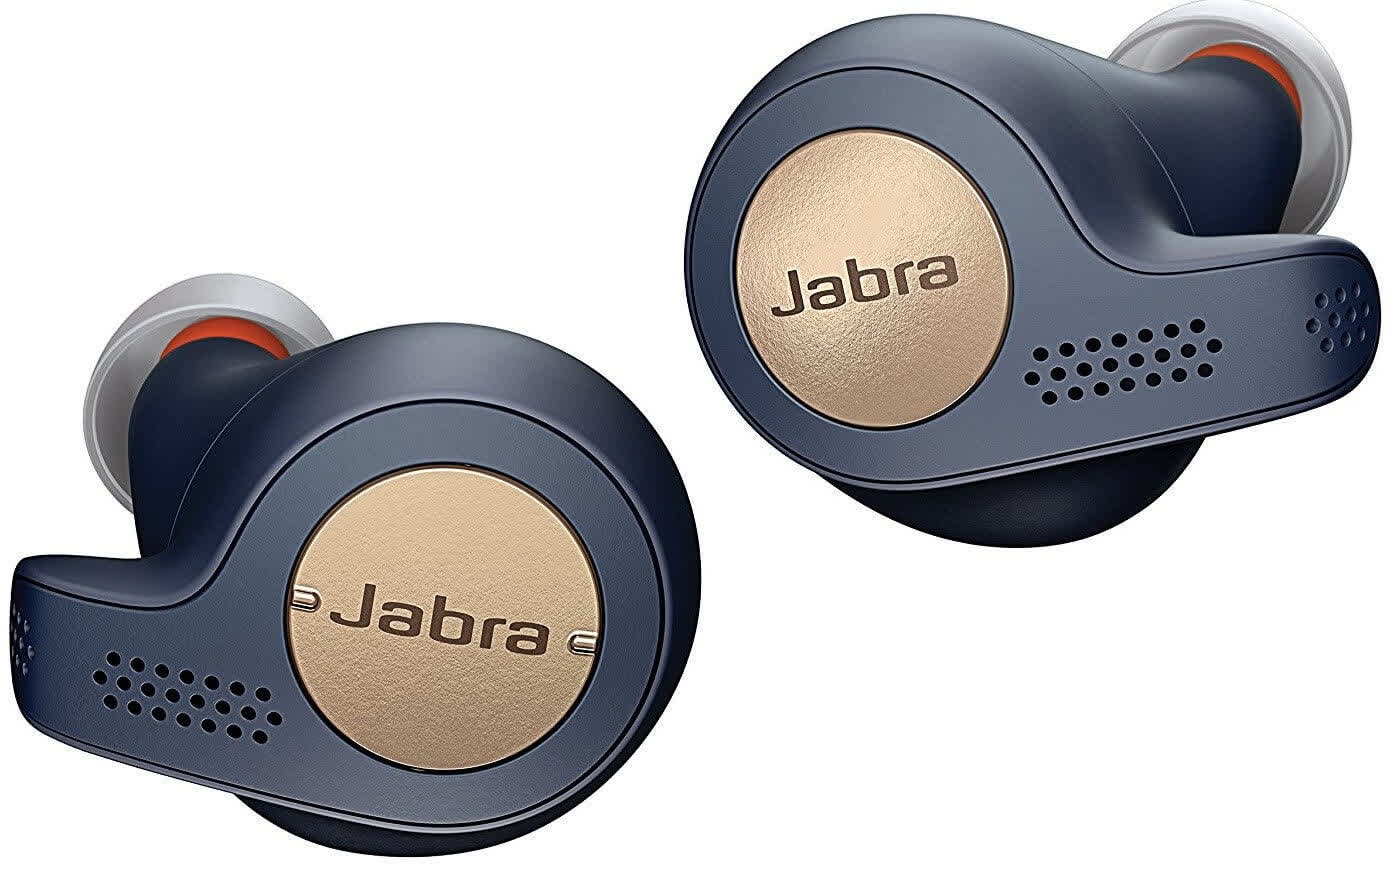 Jabra Elite Active 65t Reviews, Pros and Cons | TechSpot